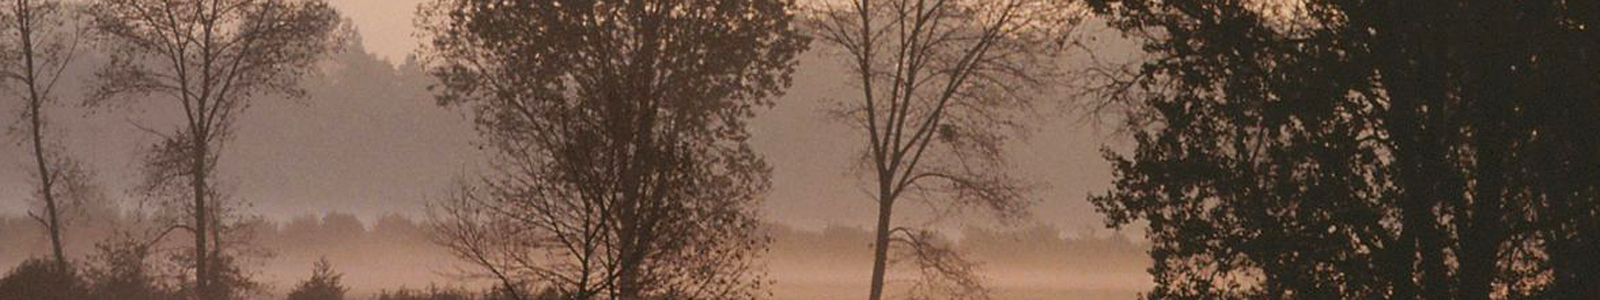 Bäume im Nebel ©DLR